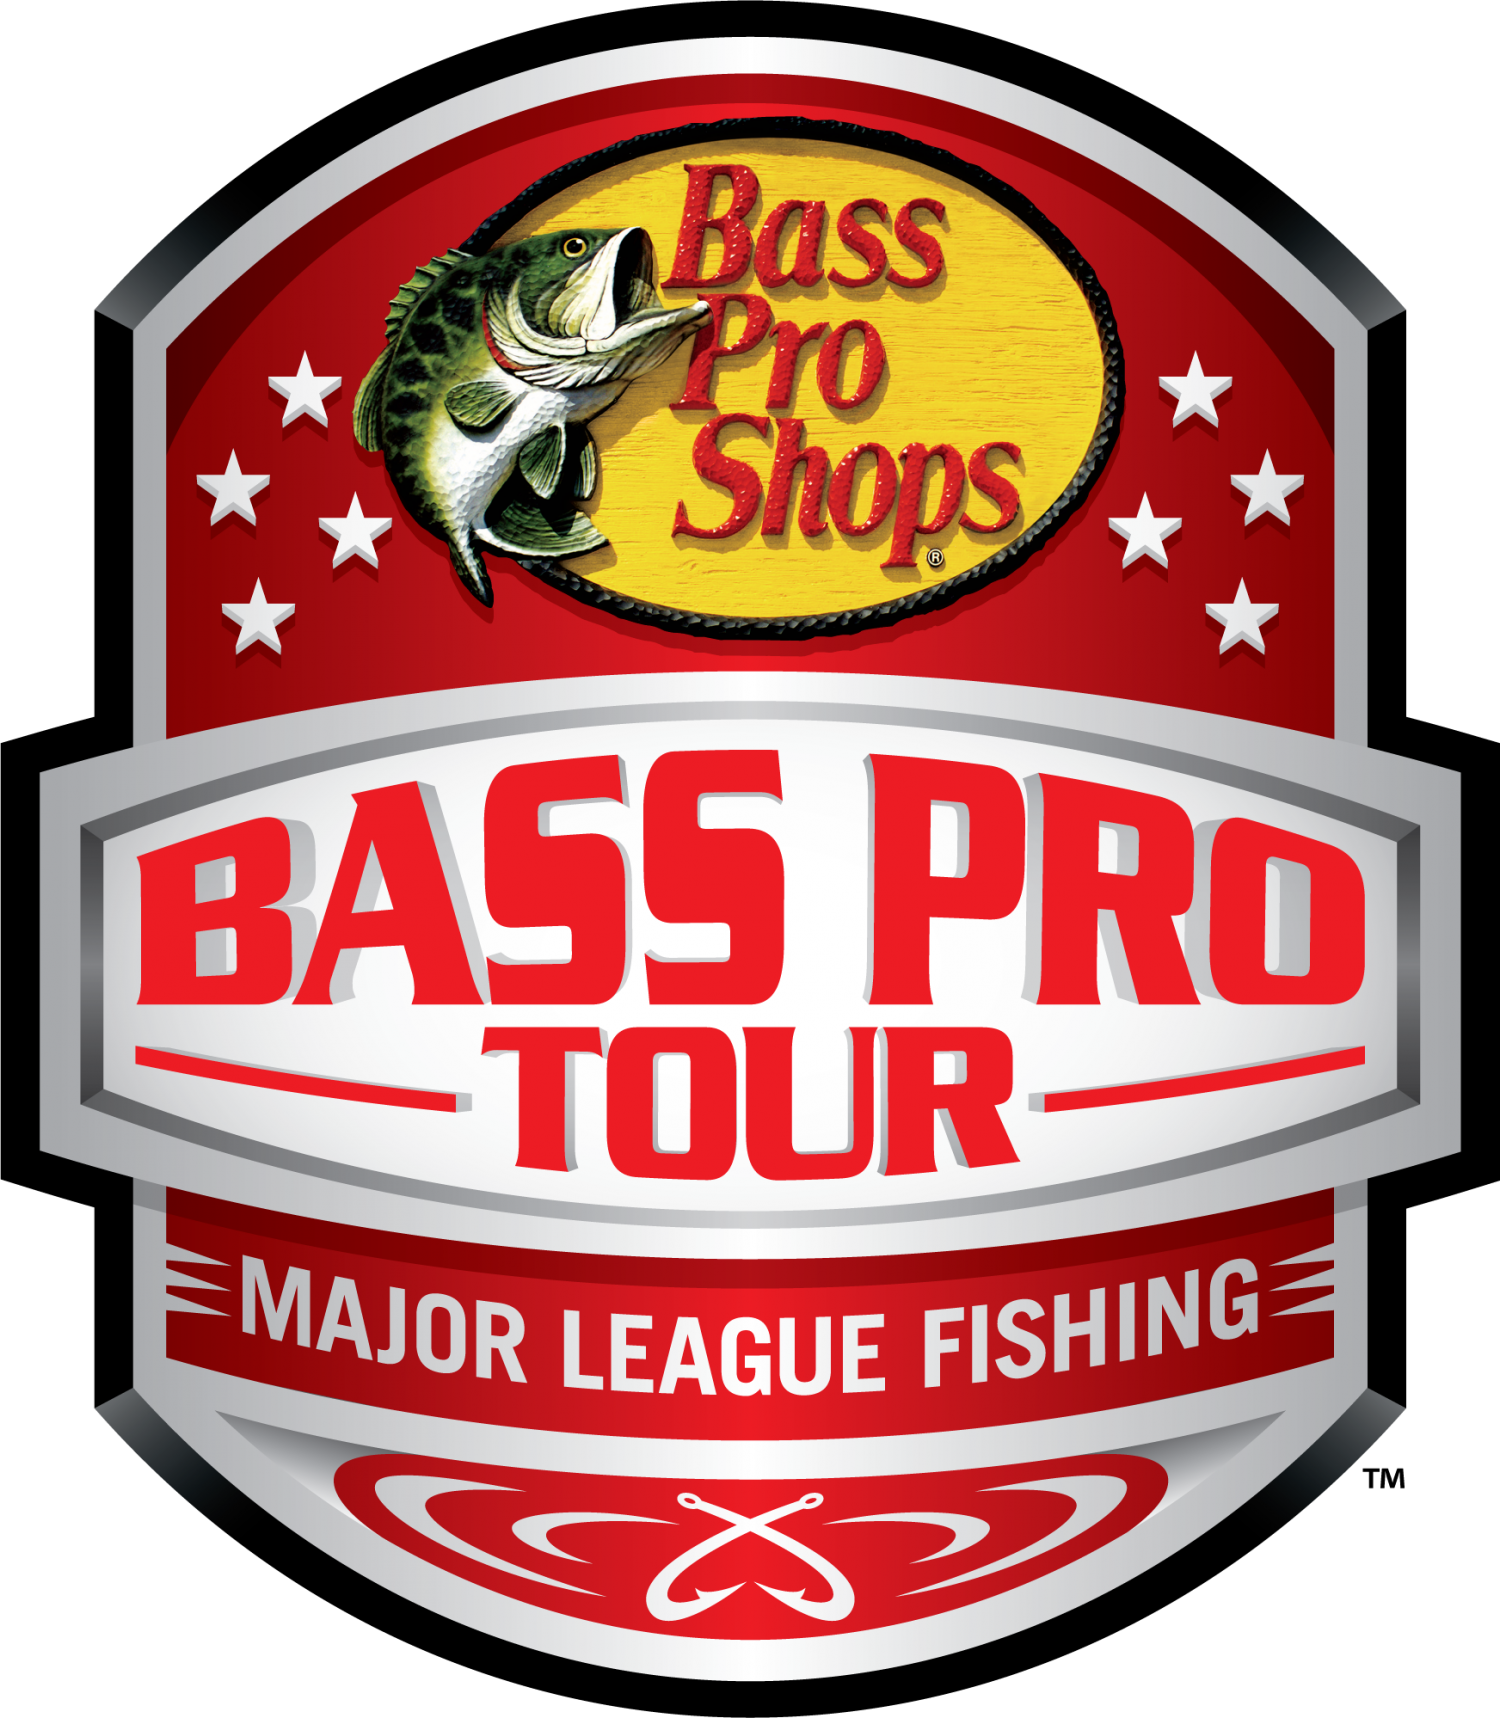 Major League Fishing names Beshears Tournament Director – Anglers